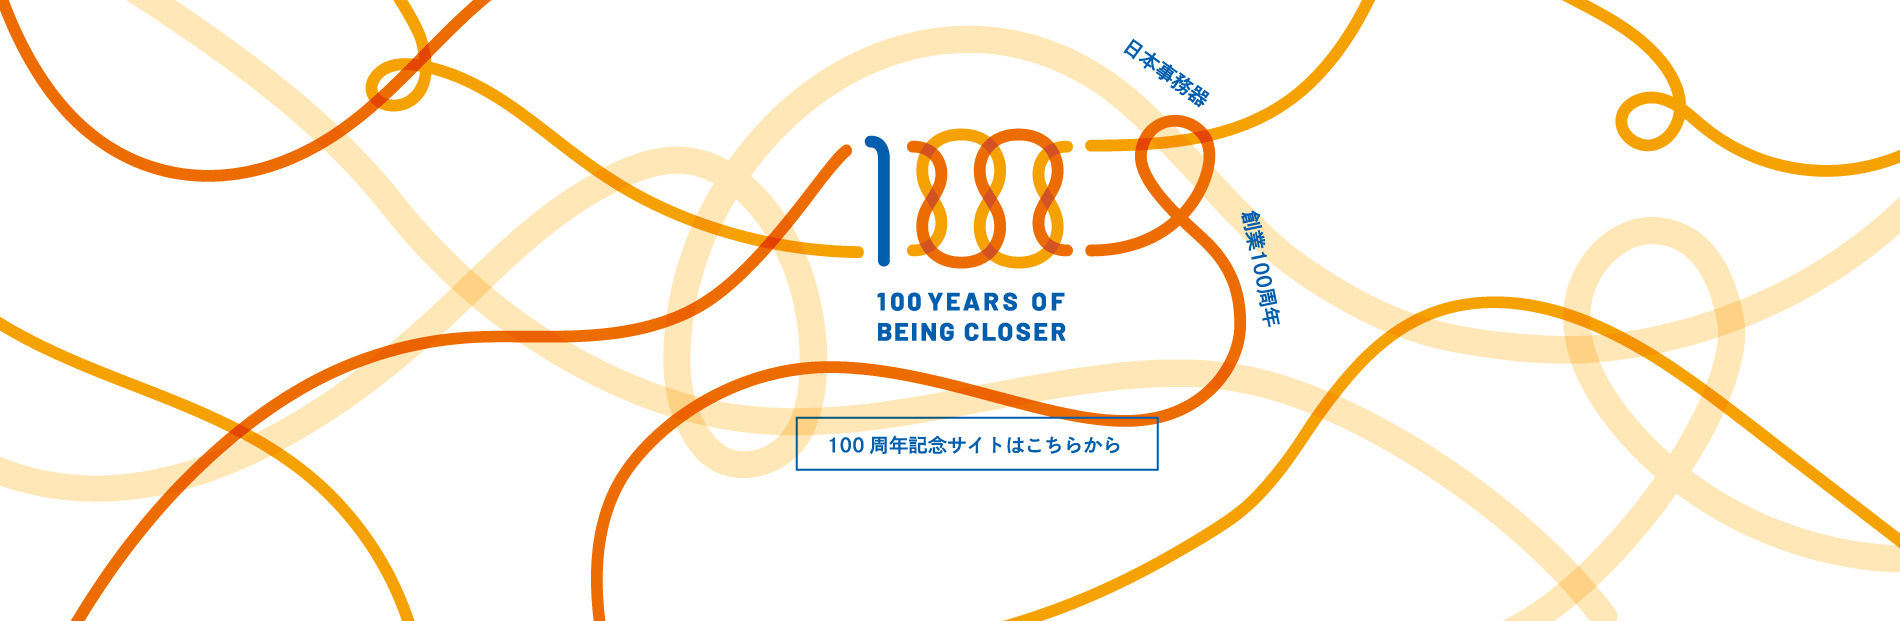 日本事務器 100周年記念サイト